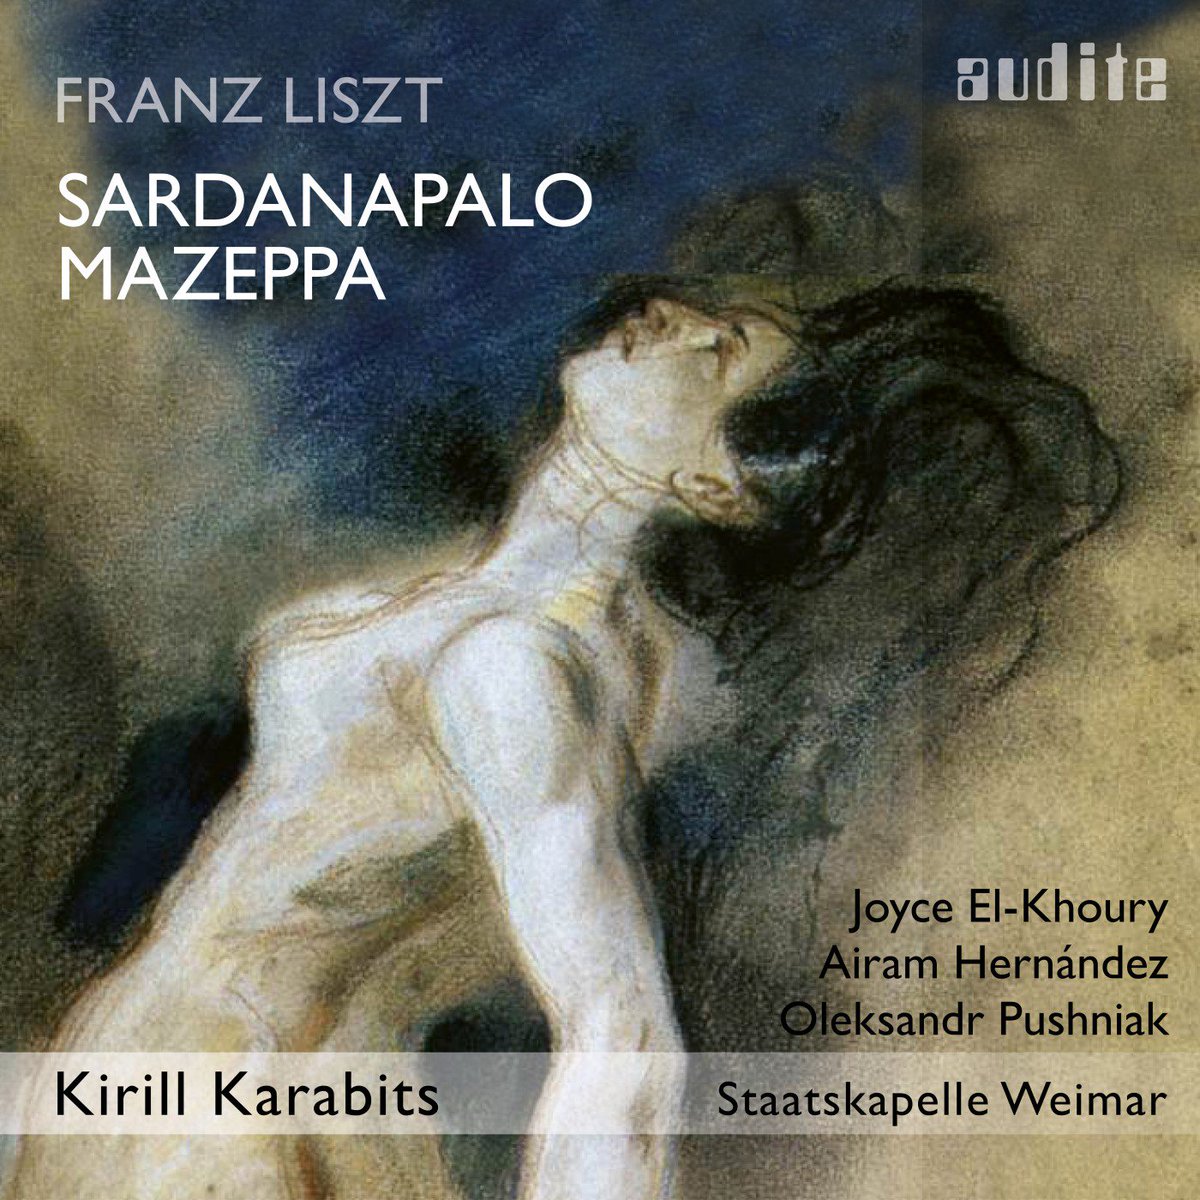 Unfinished, rediscovered, reconstructed and recorded: listen to Franz #Liszt's opera 'Sardanapalo' on IDAGIO.

🎧 -> idagio.onelink.me/0uza/sardanapa…

#audite @dntweimar @KKarabits @JoyceSoprano @airamtenor & #OleksandrPushniak #classicalmusic #streaming